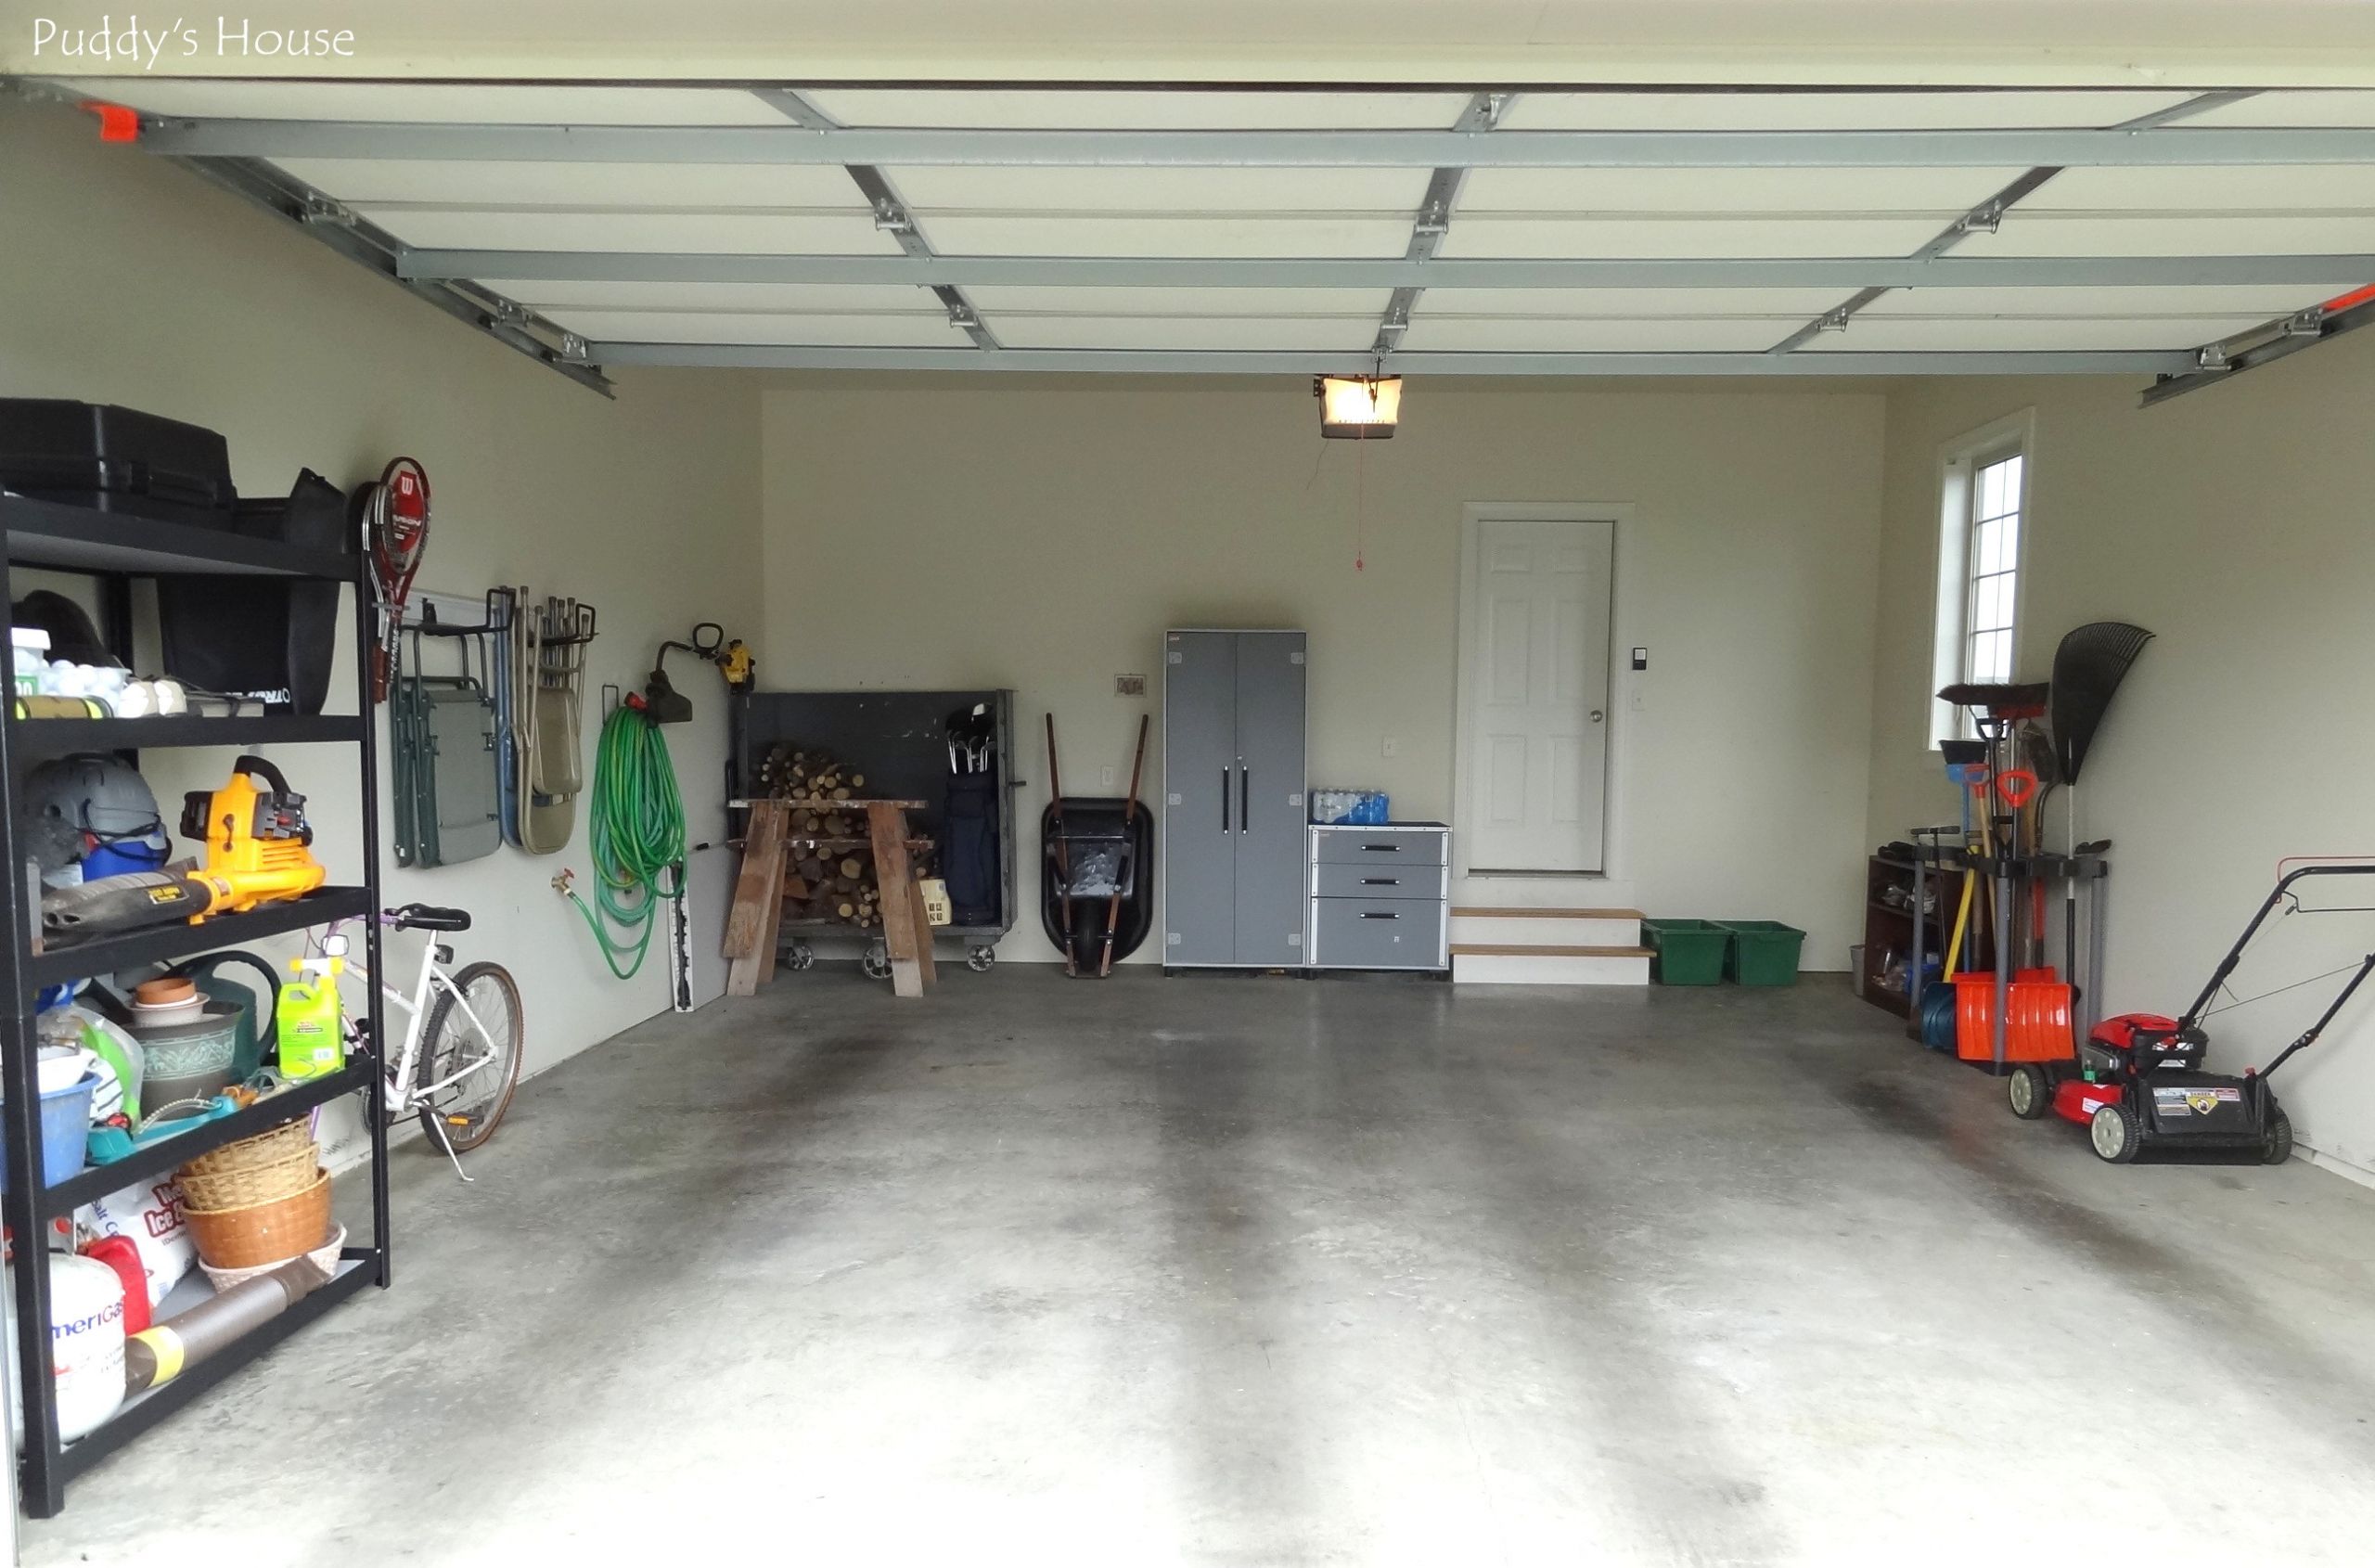 Organized Garage Images
 Operation Garage Organization – Puddy s House